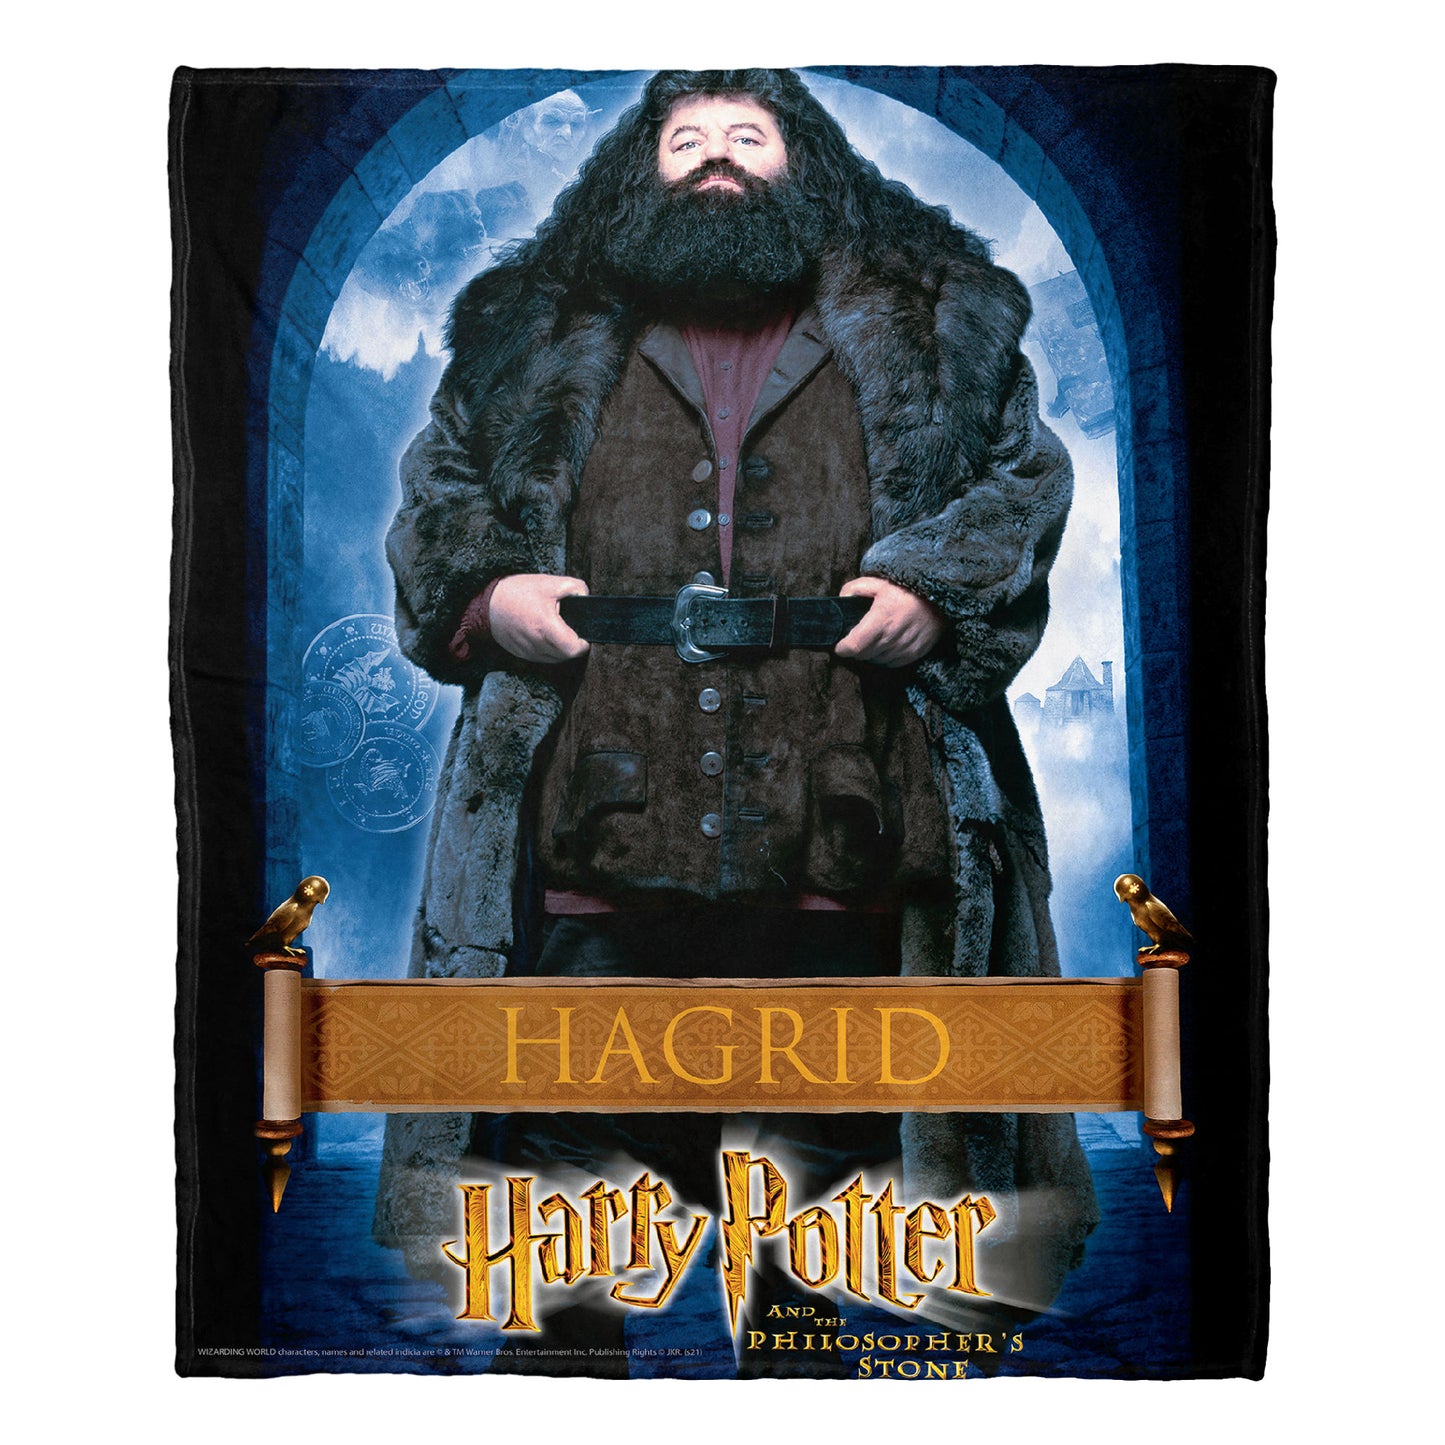 Harry Potter; Hagrid Aggretsuko Comics Silk Touch Throw Blanket; 50" x 60"